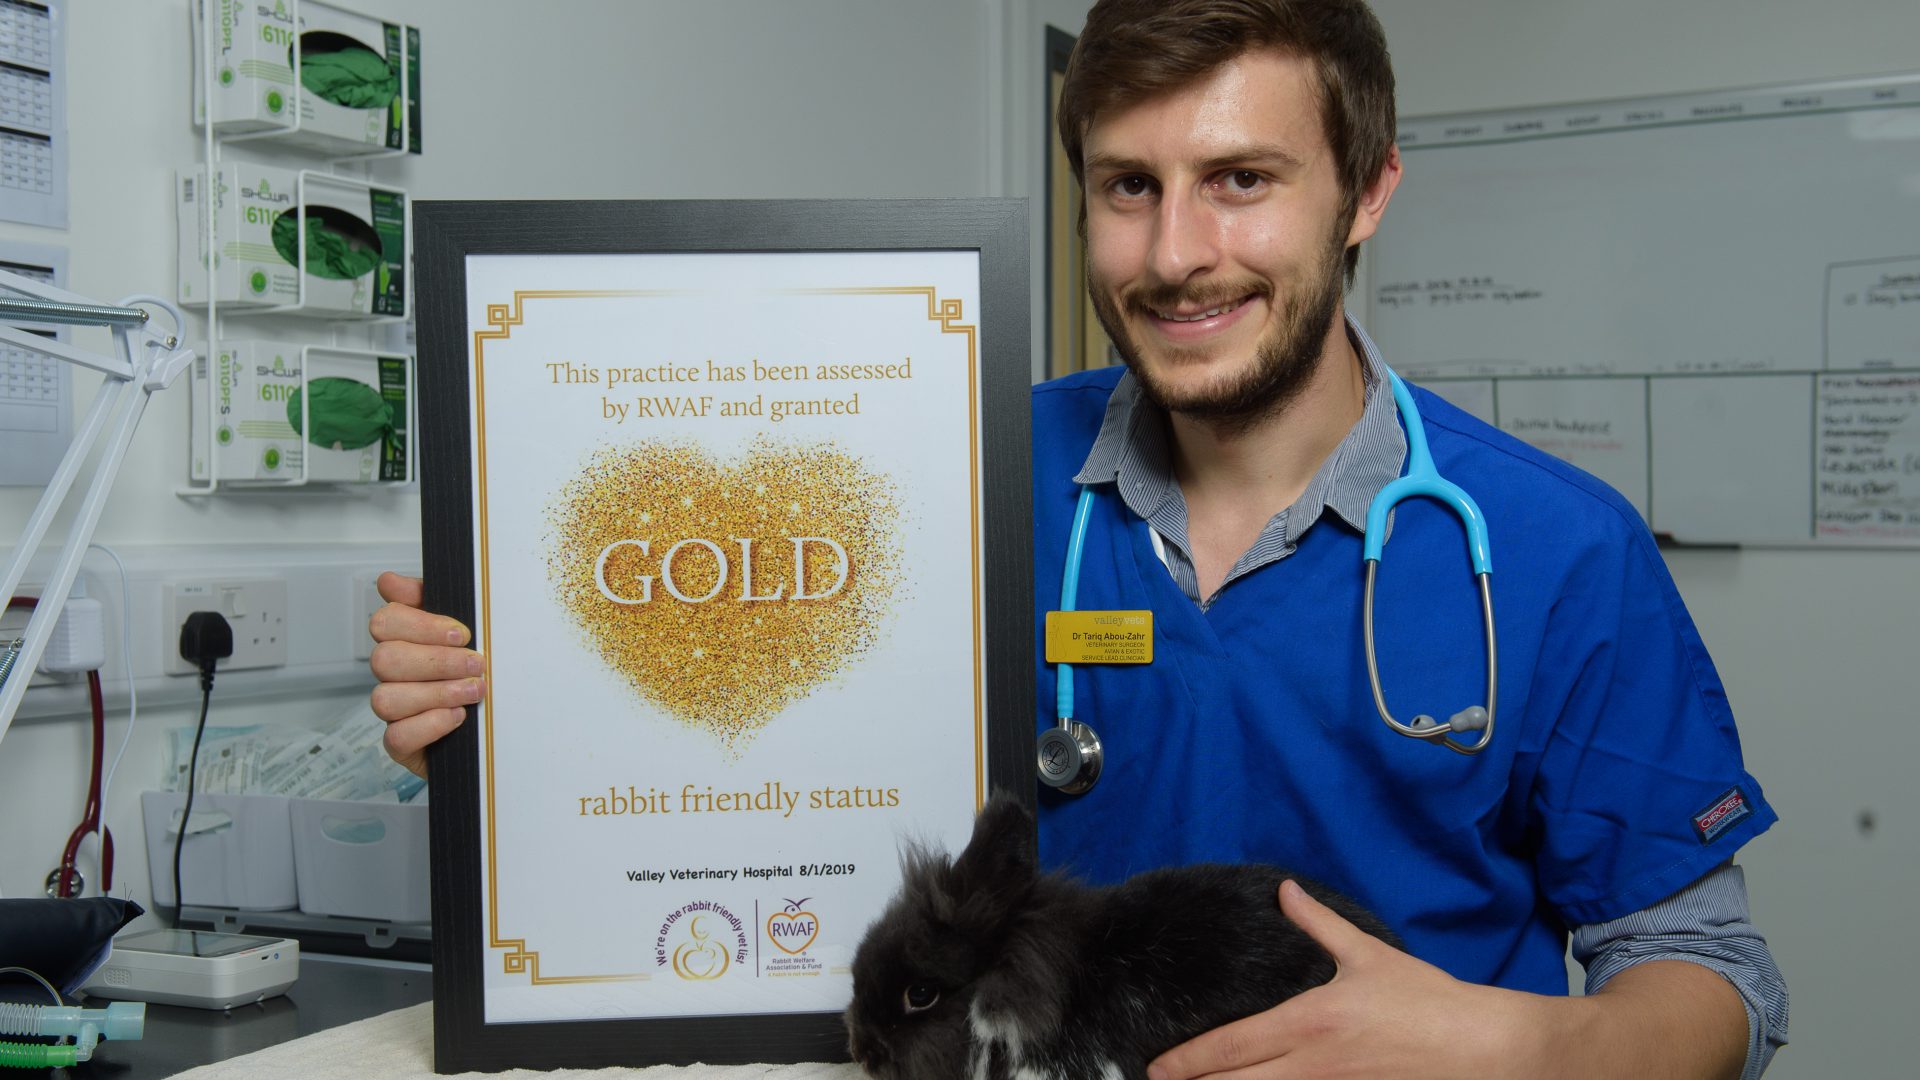 New Cardiff veterinary hospital is tops for rabbit care - VetPartners